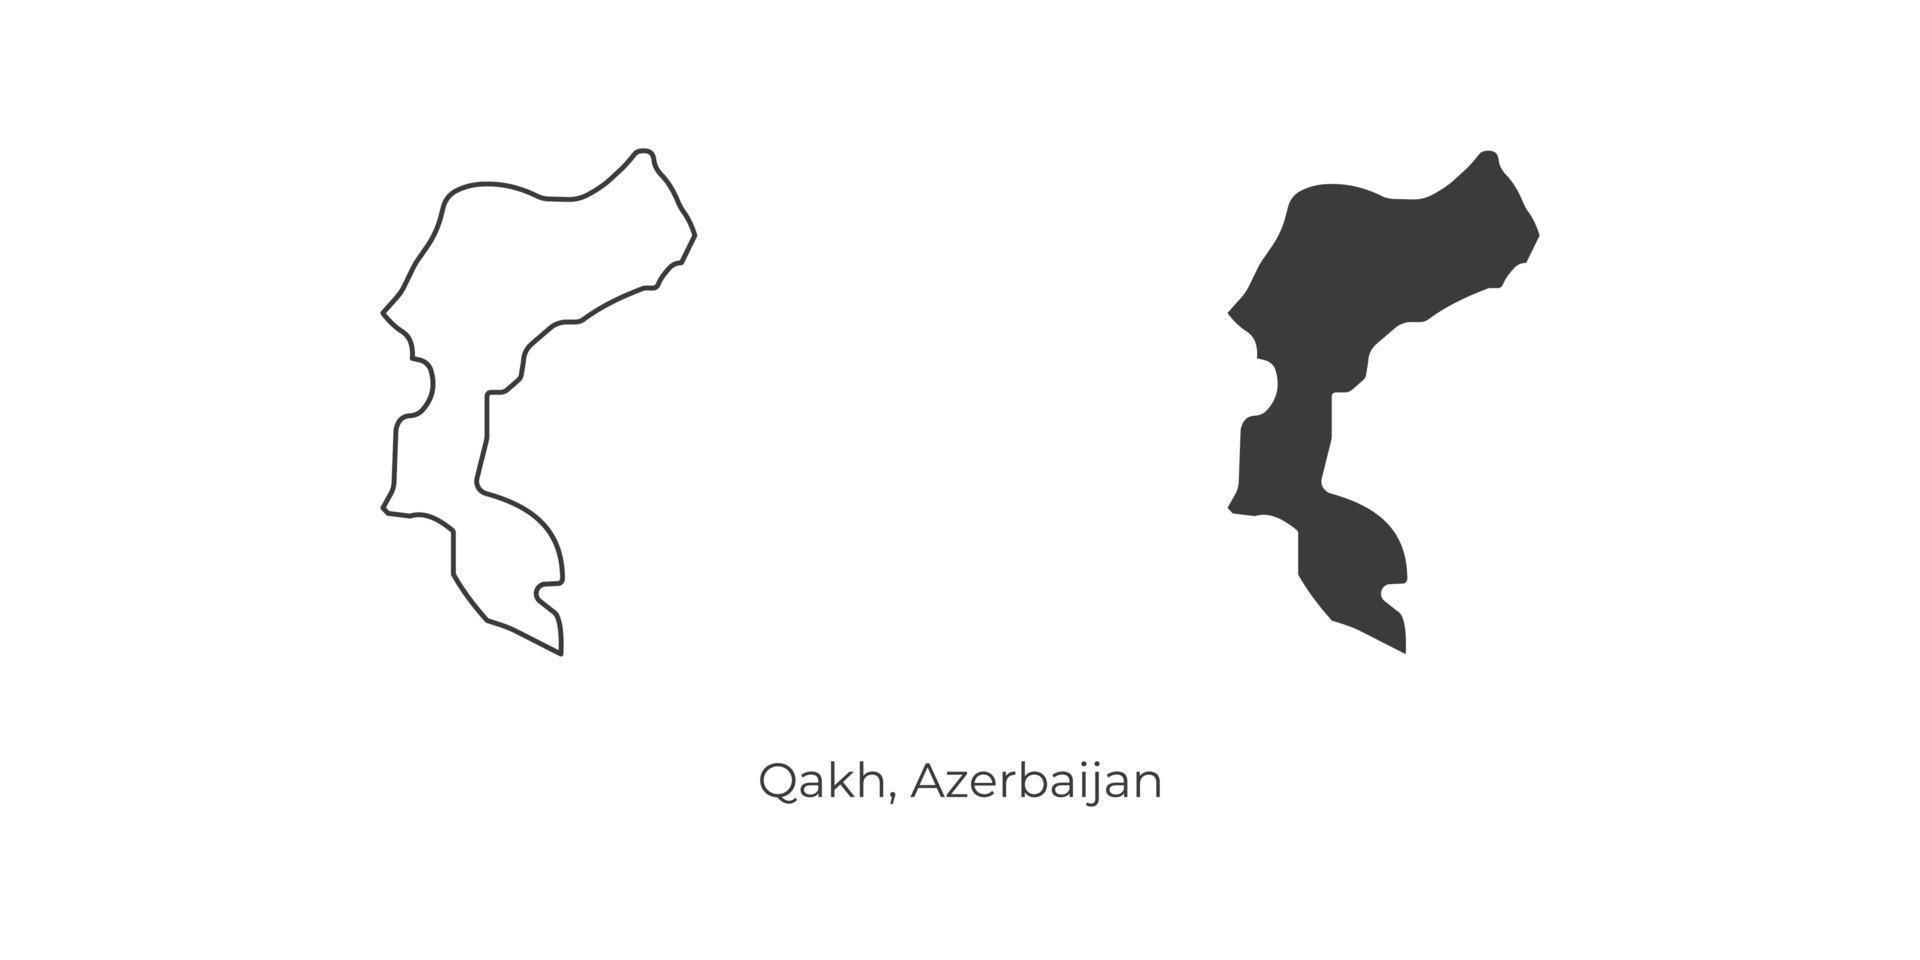 illustration vectorielle simple de la carte de qakh, azerbaïdjan. vecteur